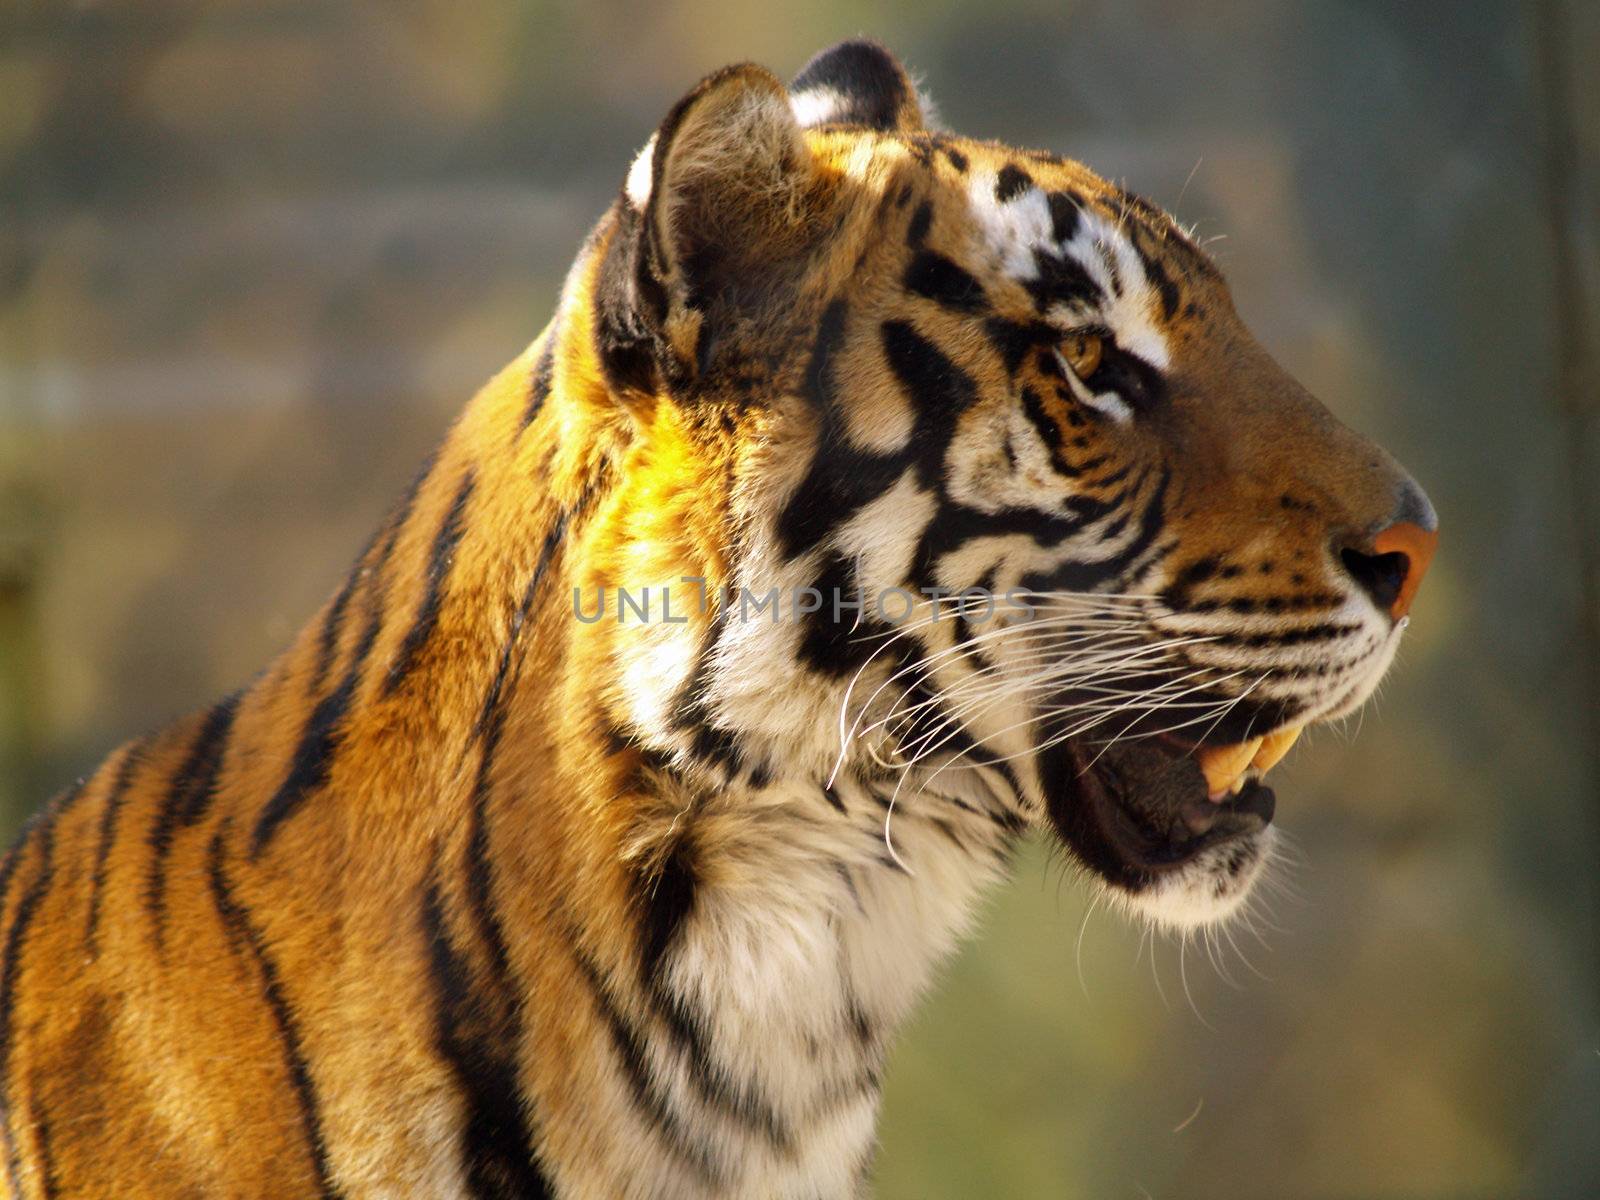 Tiger face closeup by Frankljunior